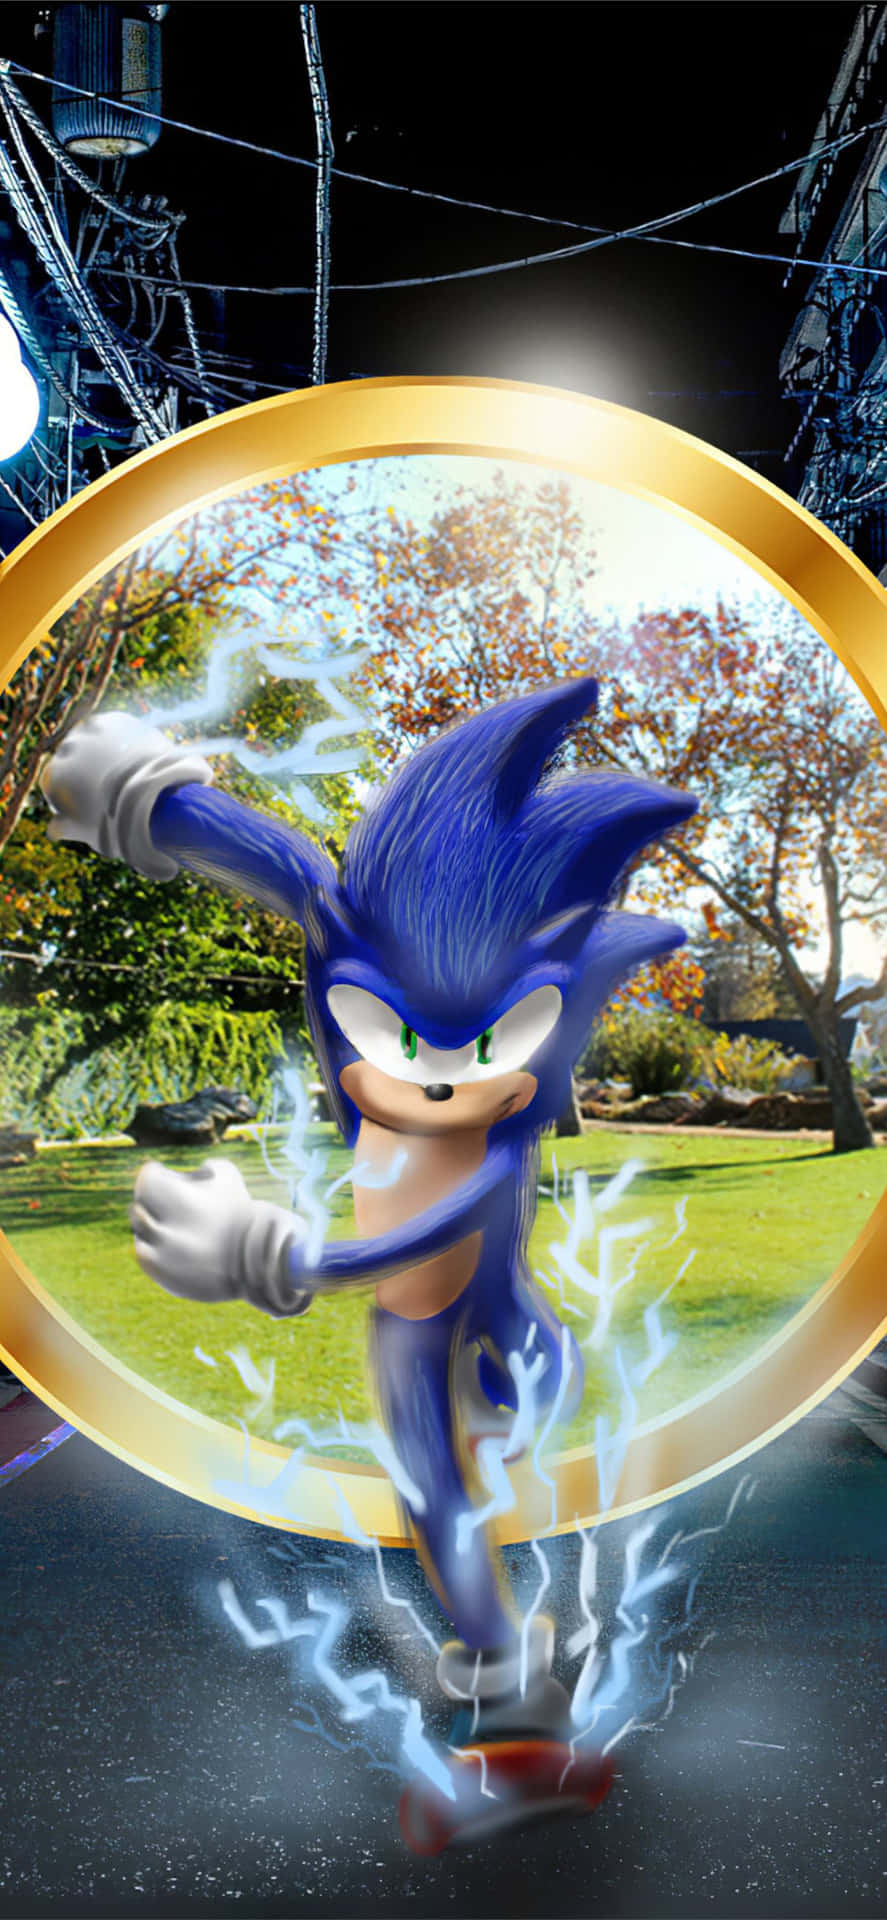 Sonic the Hedgehog: A Digital Art Masterpiece Wallpaper